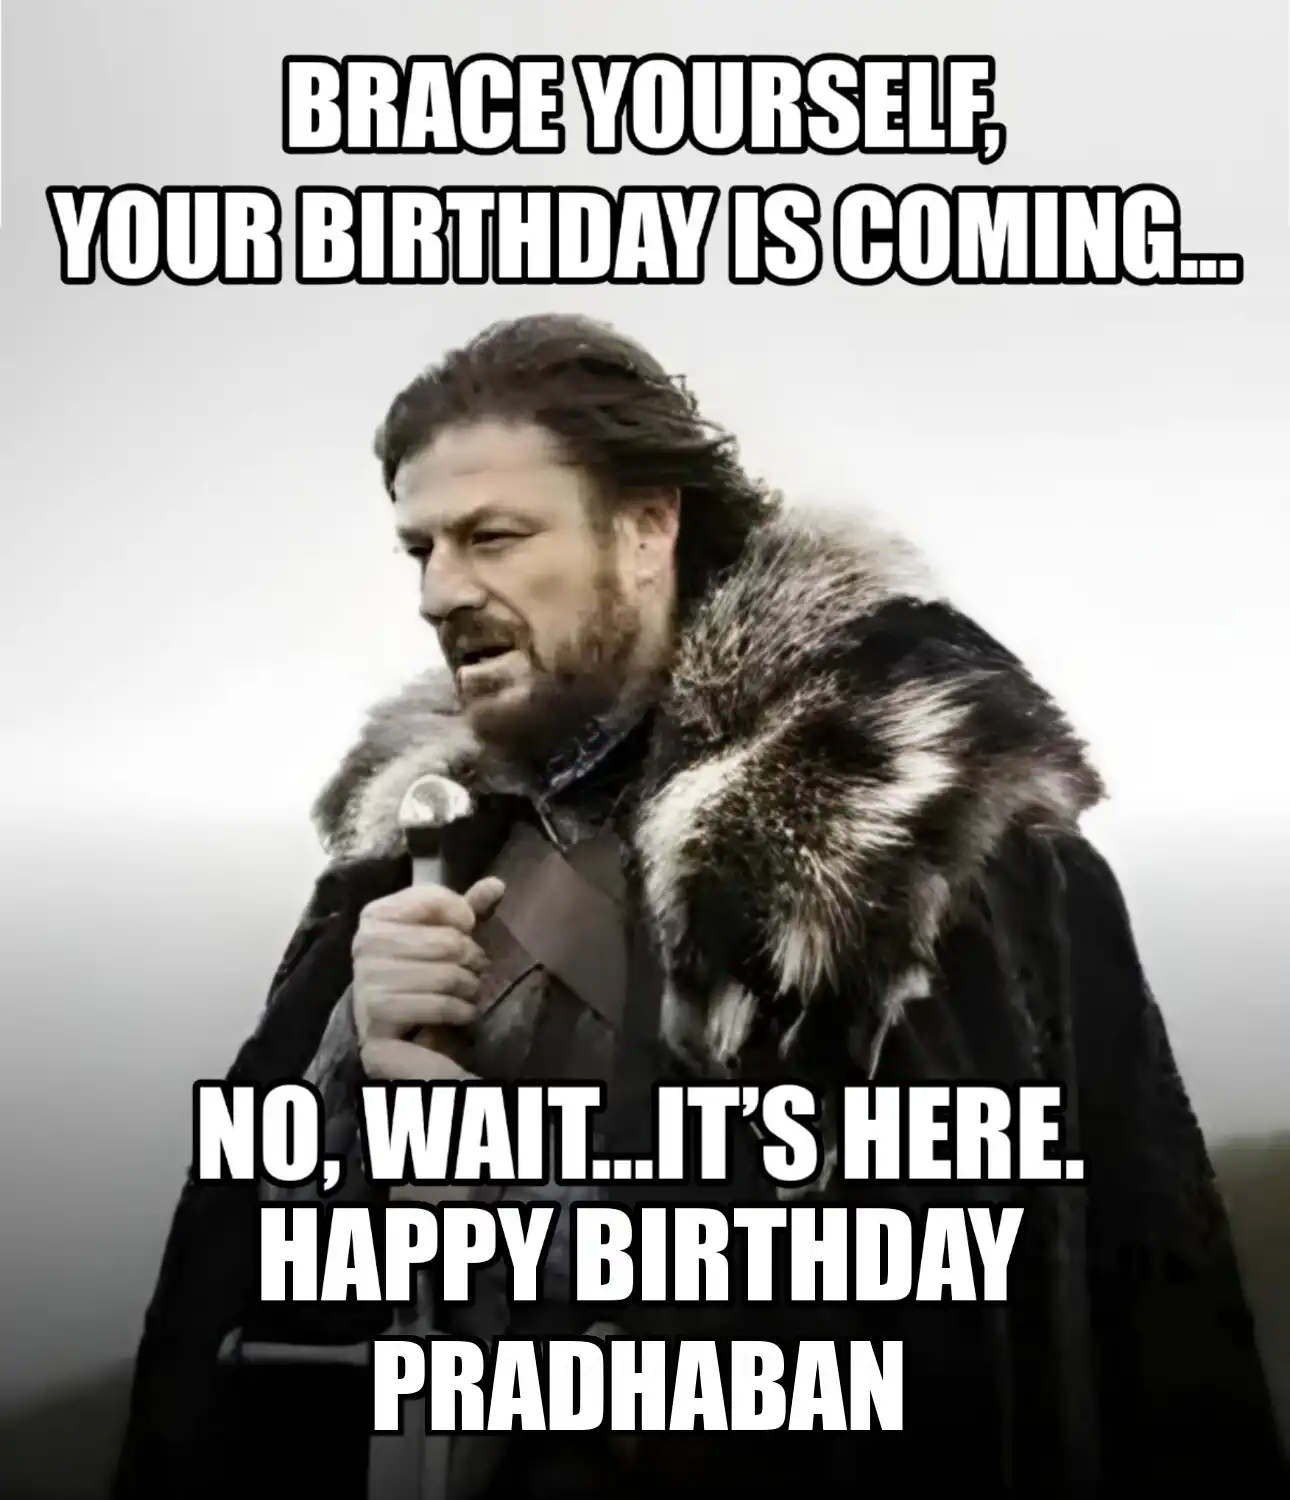 Happy Birthday Pradhaban Brace Yourself Your Birthday Is Coming Meme